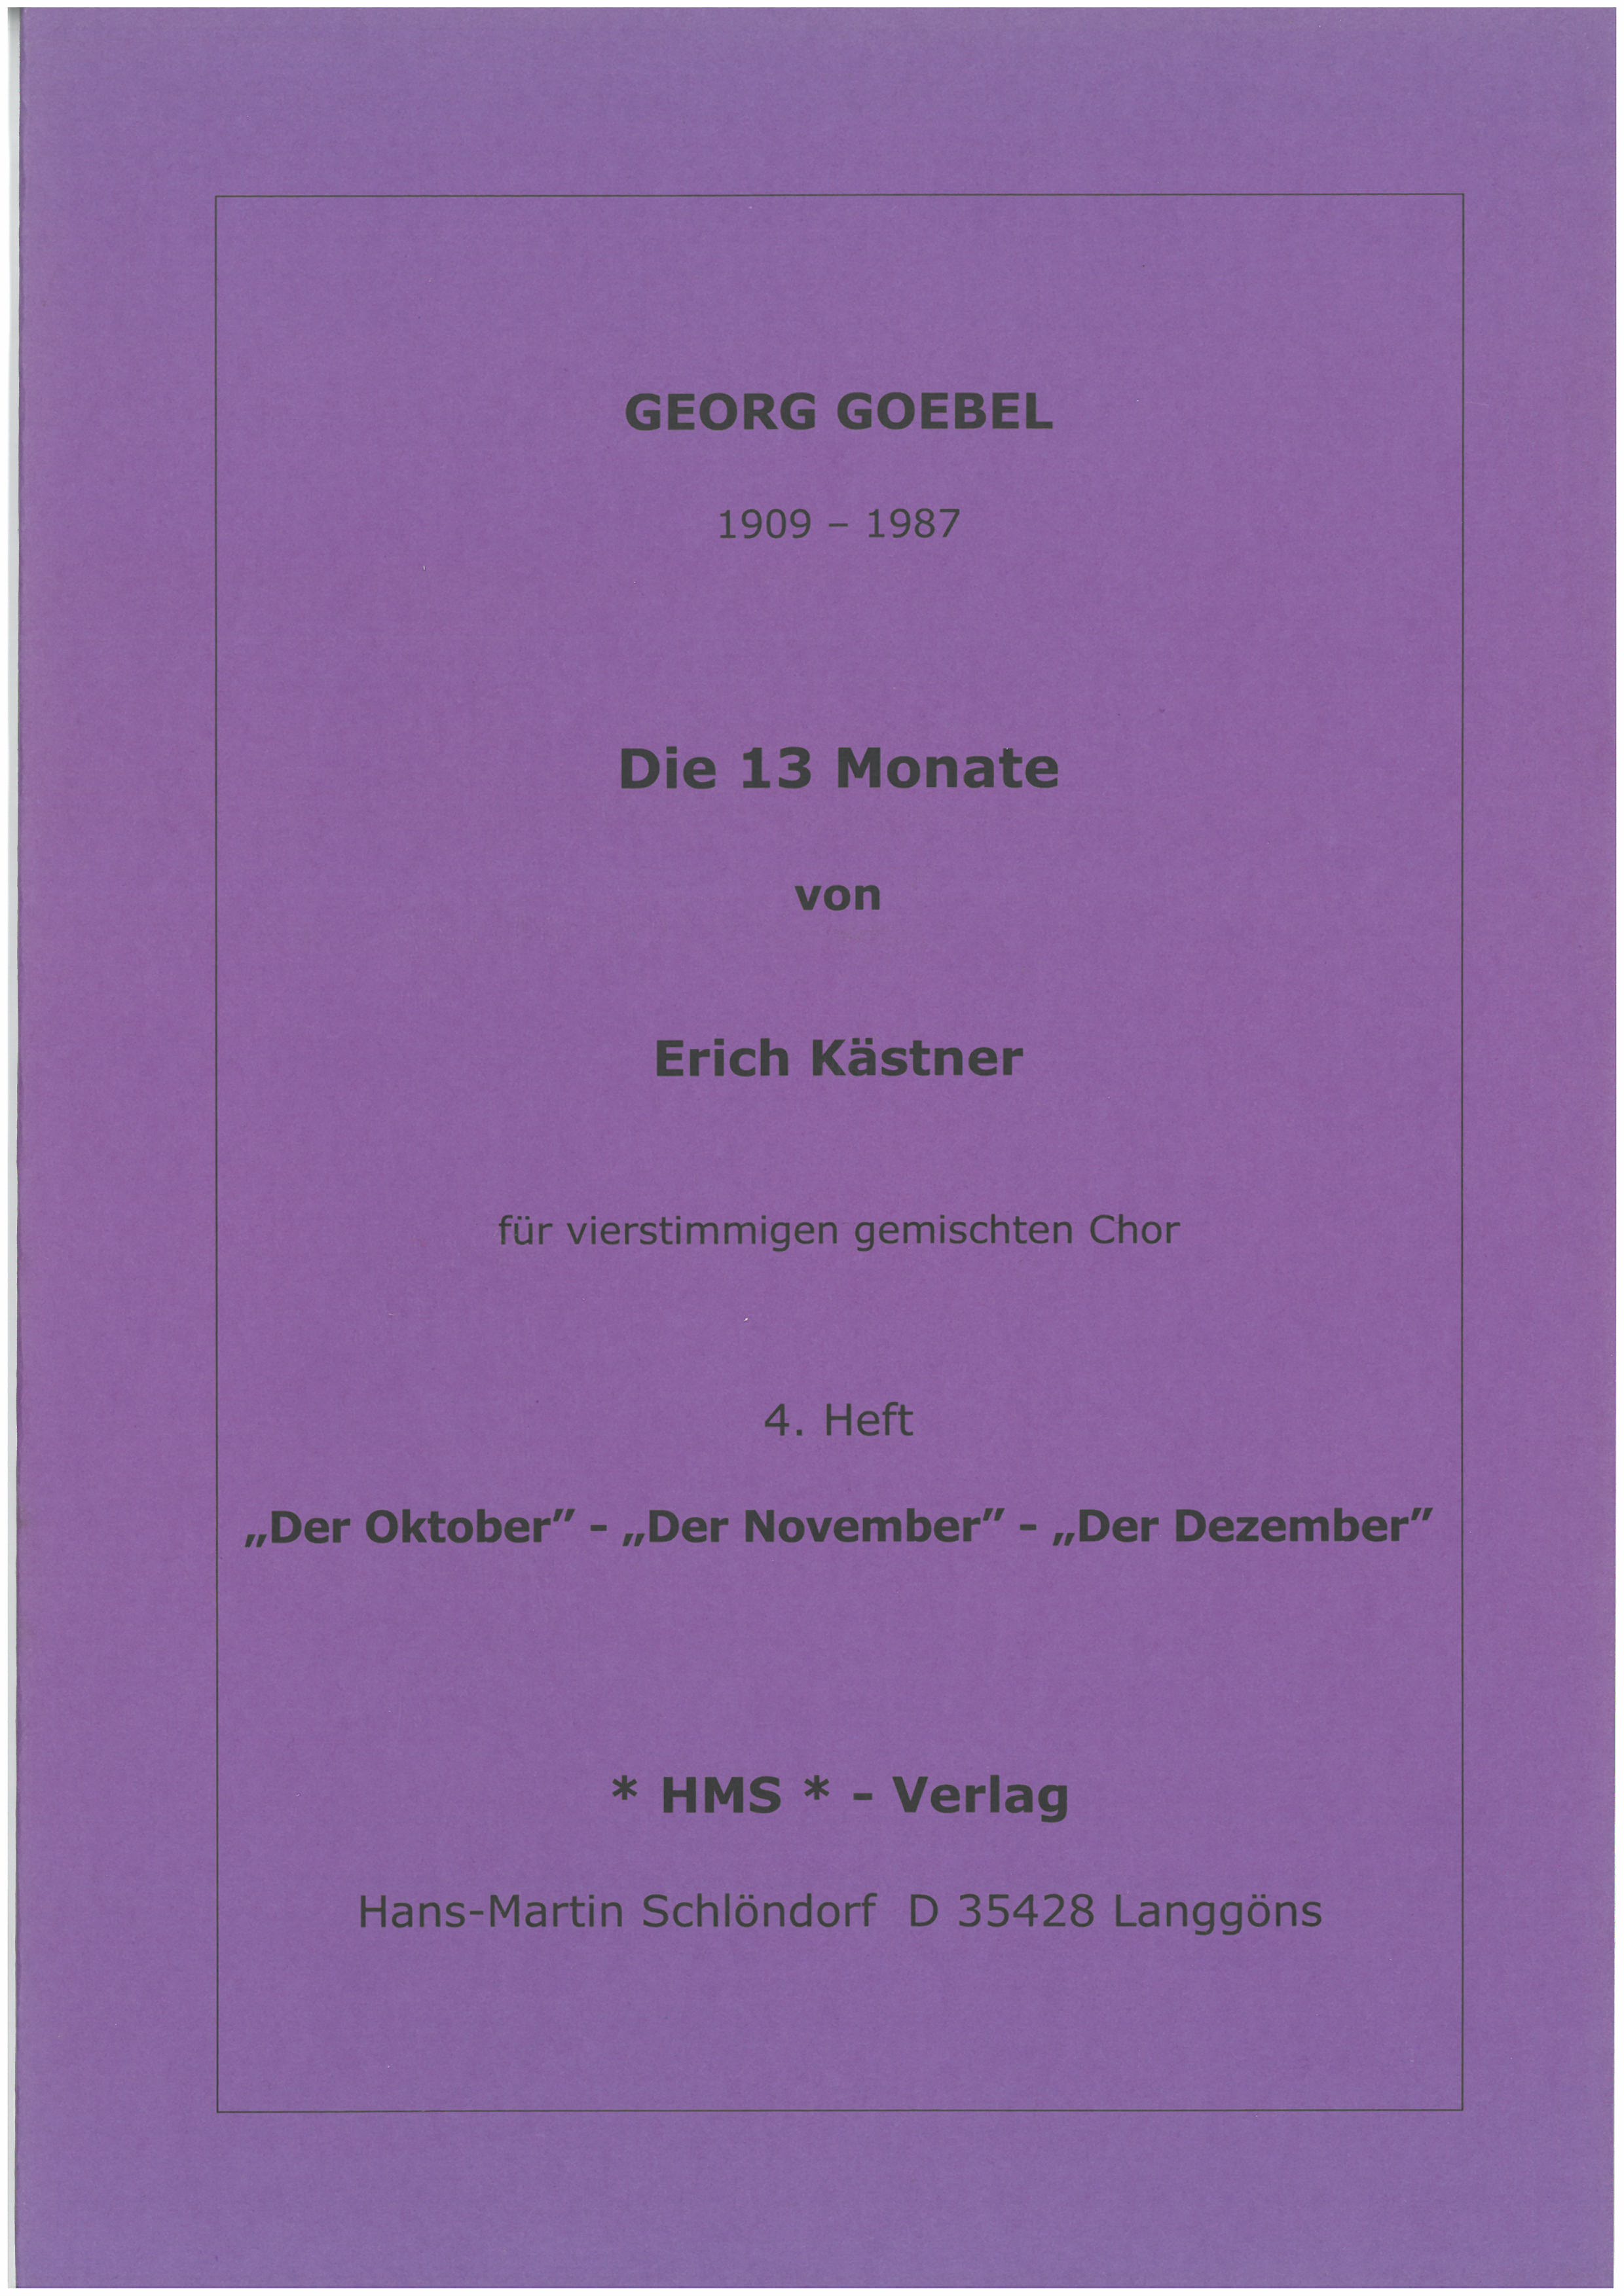 Oktober, November, Dezember, Heft 4 aus dem Chorzyklus 13 Monate - nach Erich Kästnerr